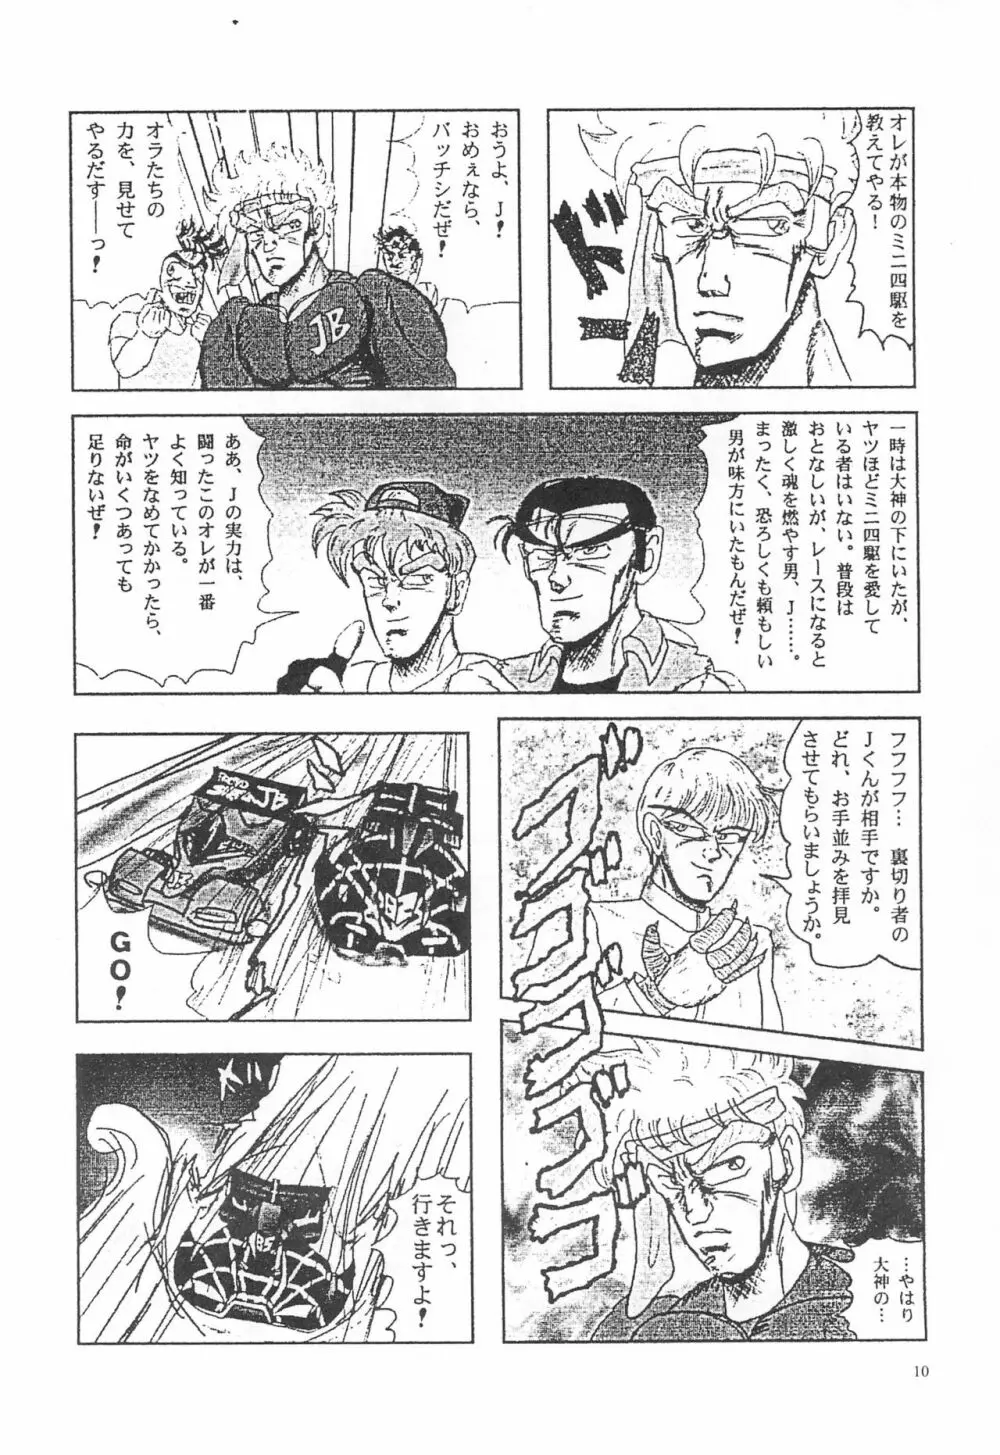 閃虹丸作品集 Vol.1 10ページ